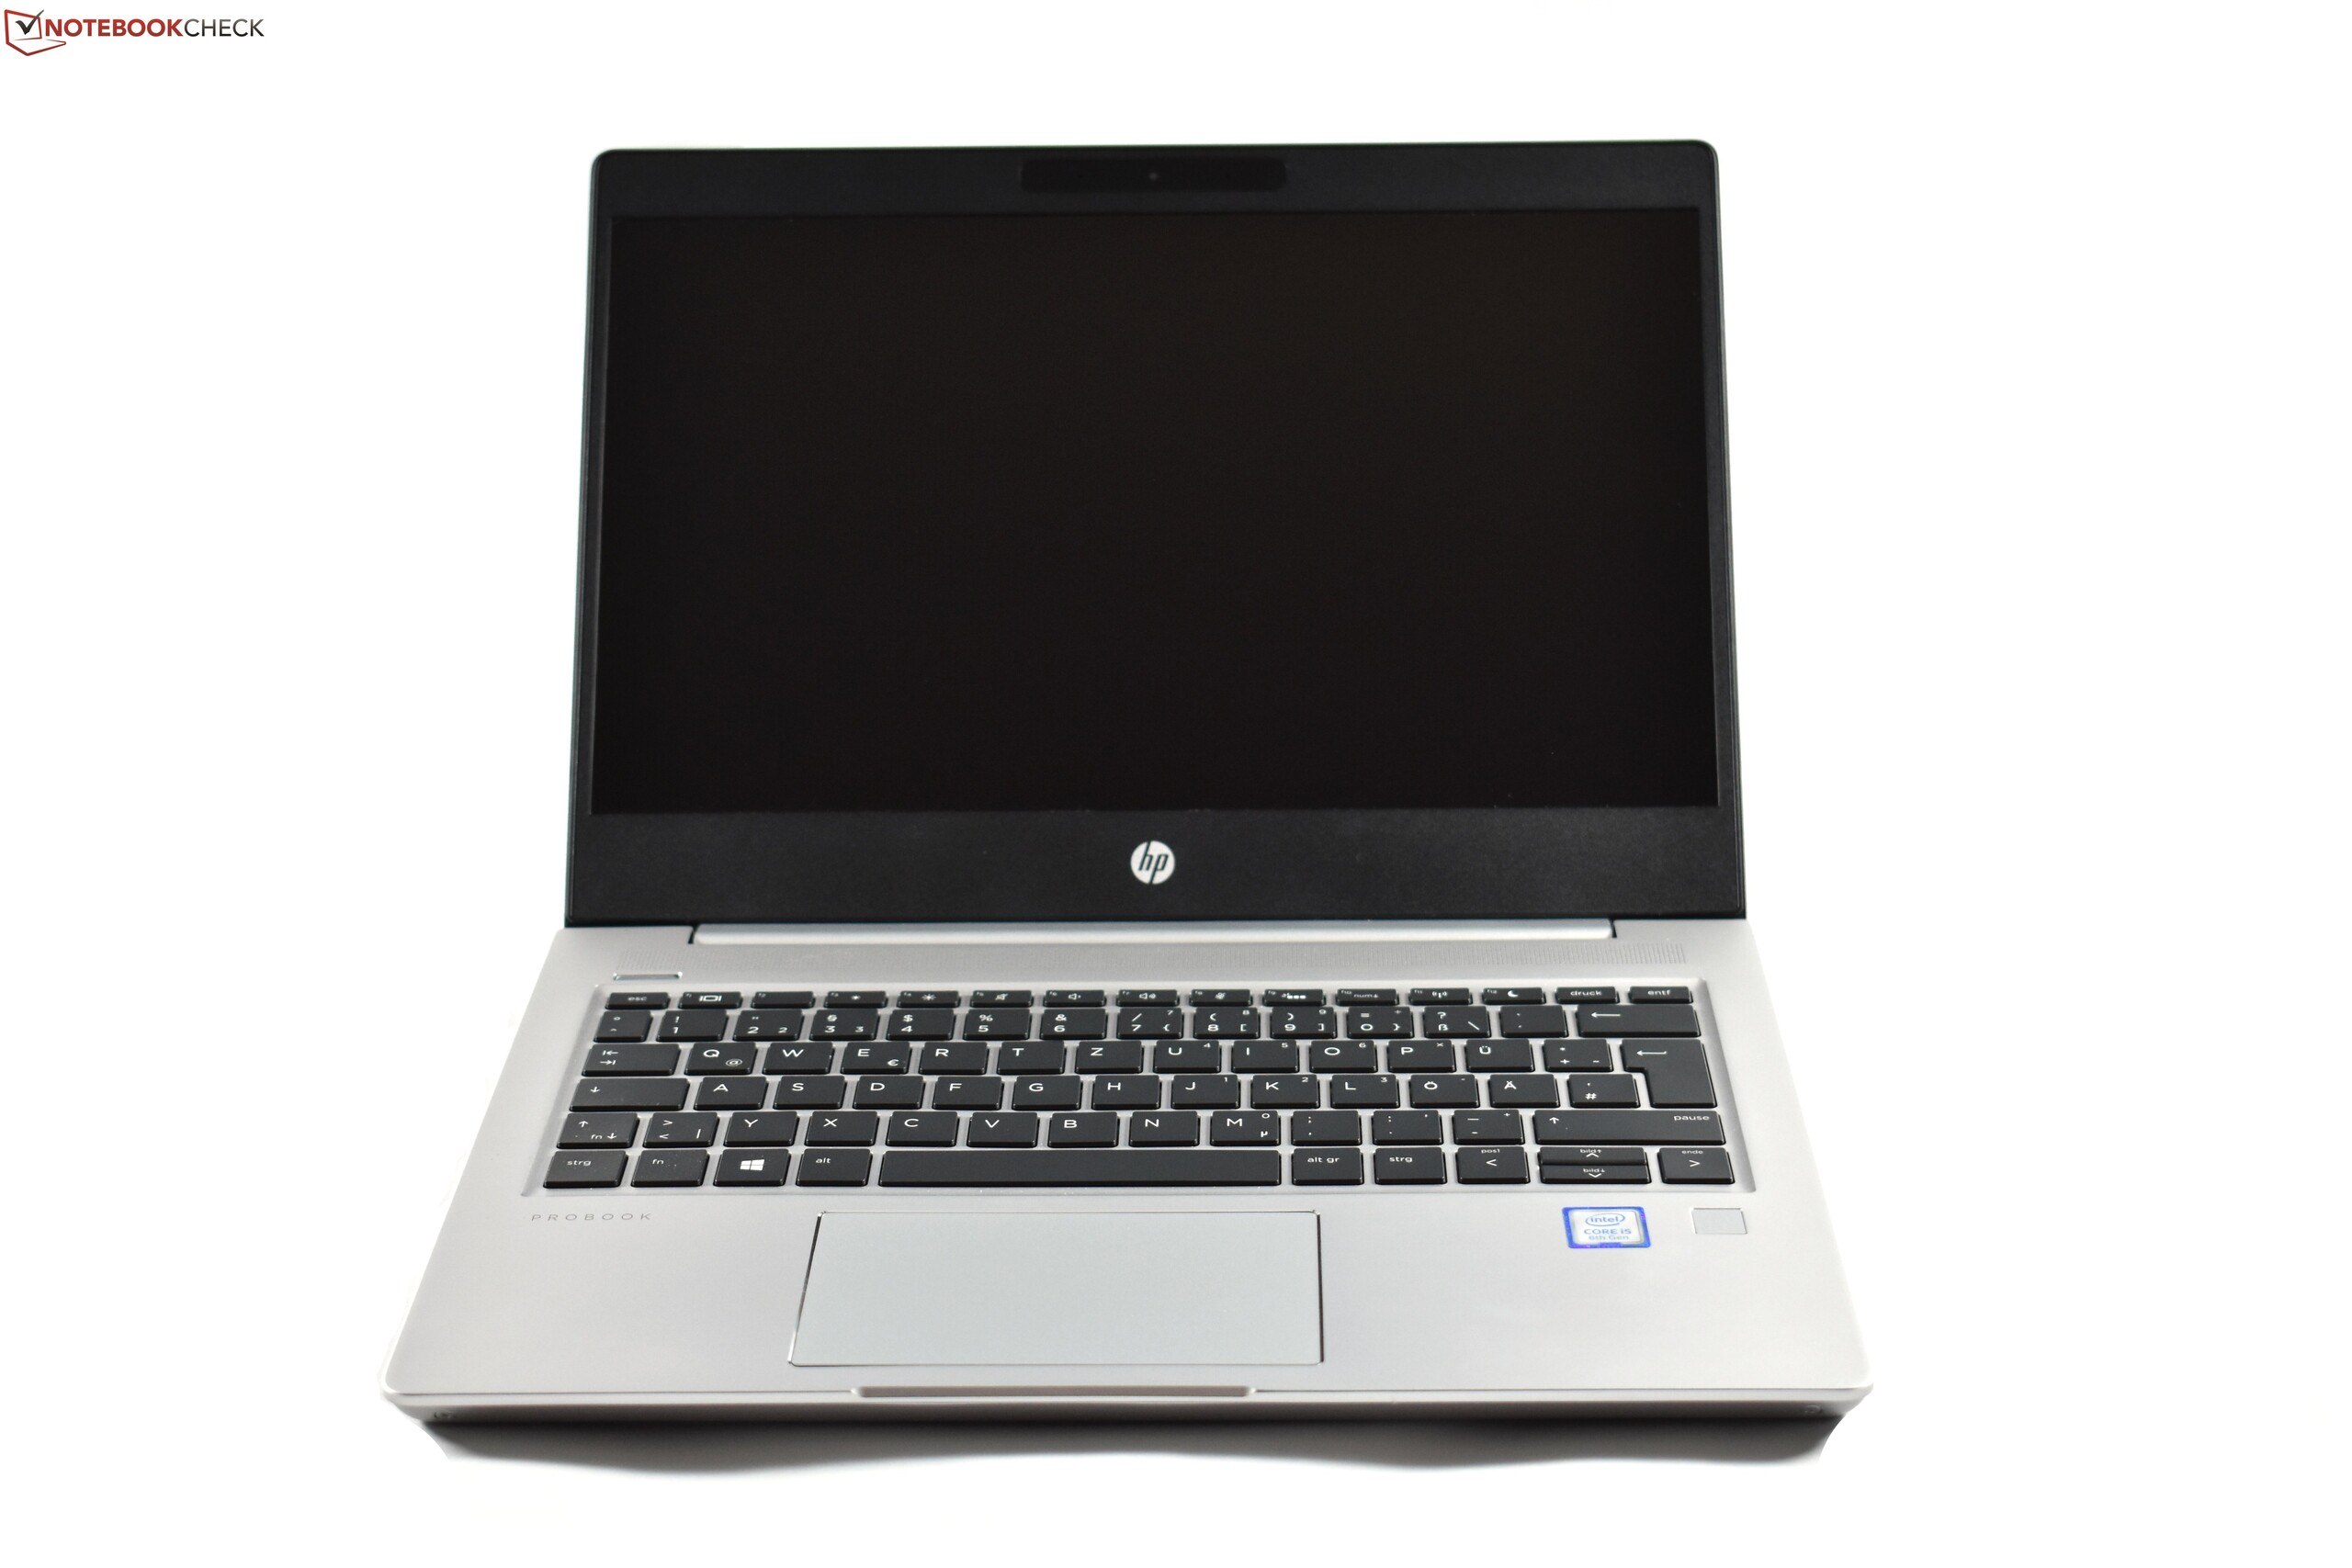 HP ProBook 430 G6 (Core i5-8265U, 8 GB RAM, 256 SSD, Laptop - NotebookCheck.net Reviews